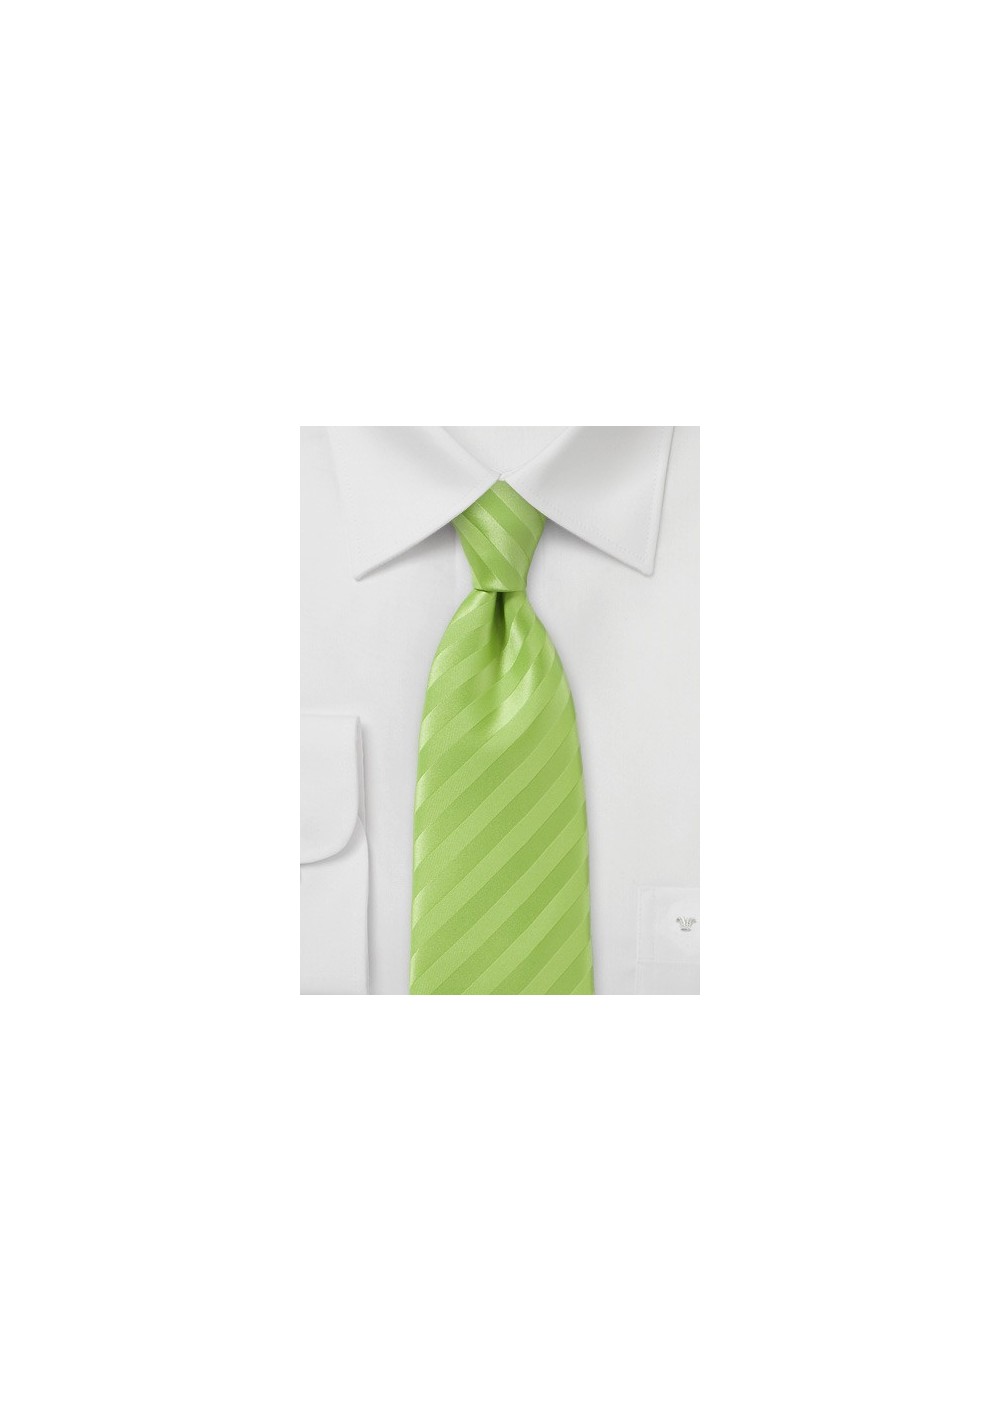 Electric Green Narrow Neck Tie